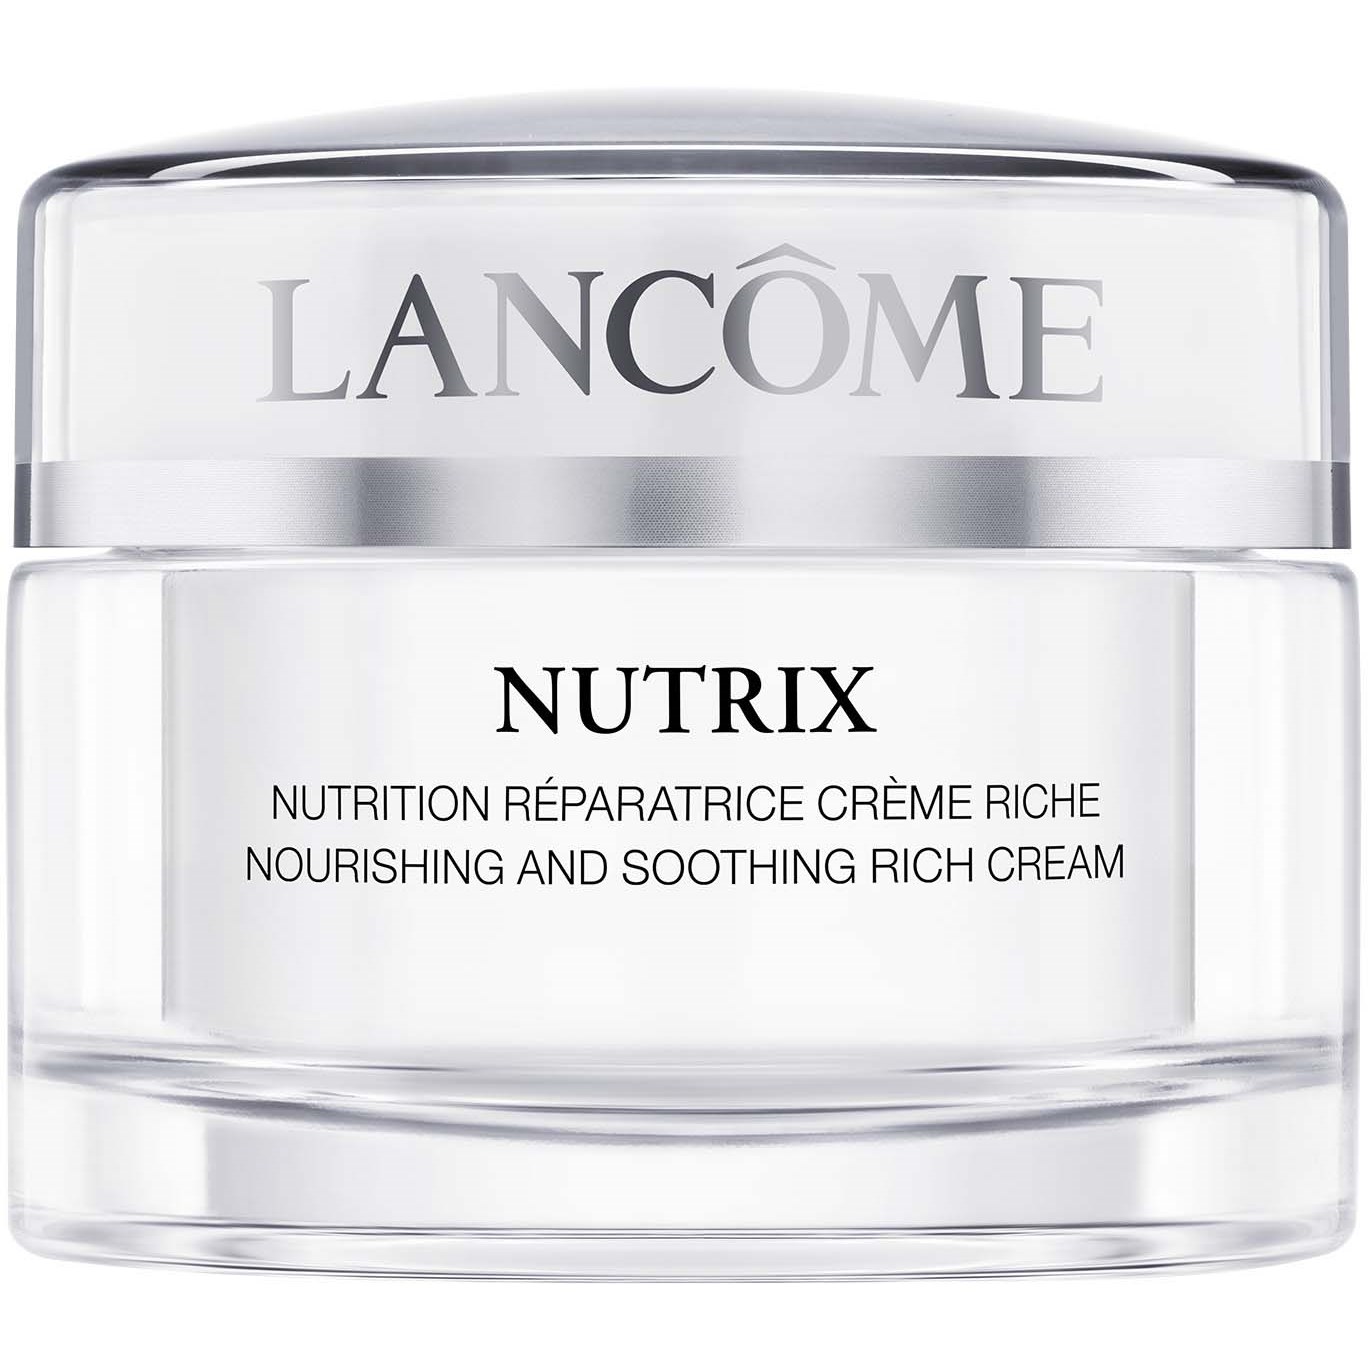 Zdjęcia - Kremy i toniki Lancome Lancôme Nutrix Visage Face Cream 50 ml 